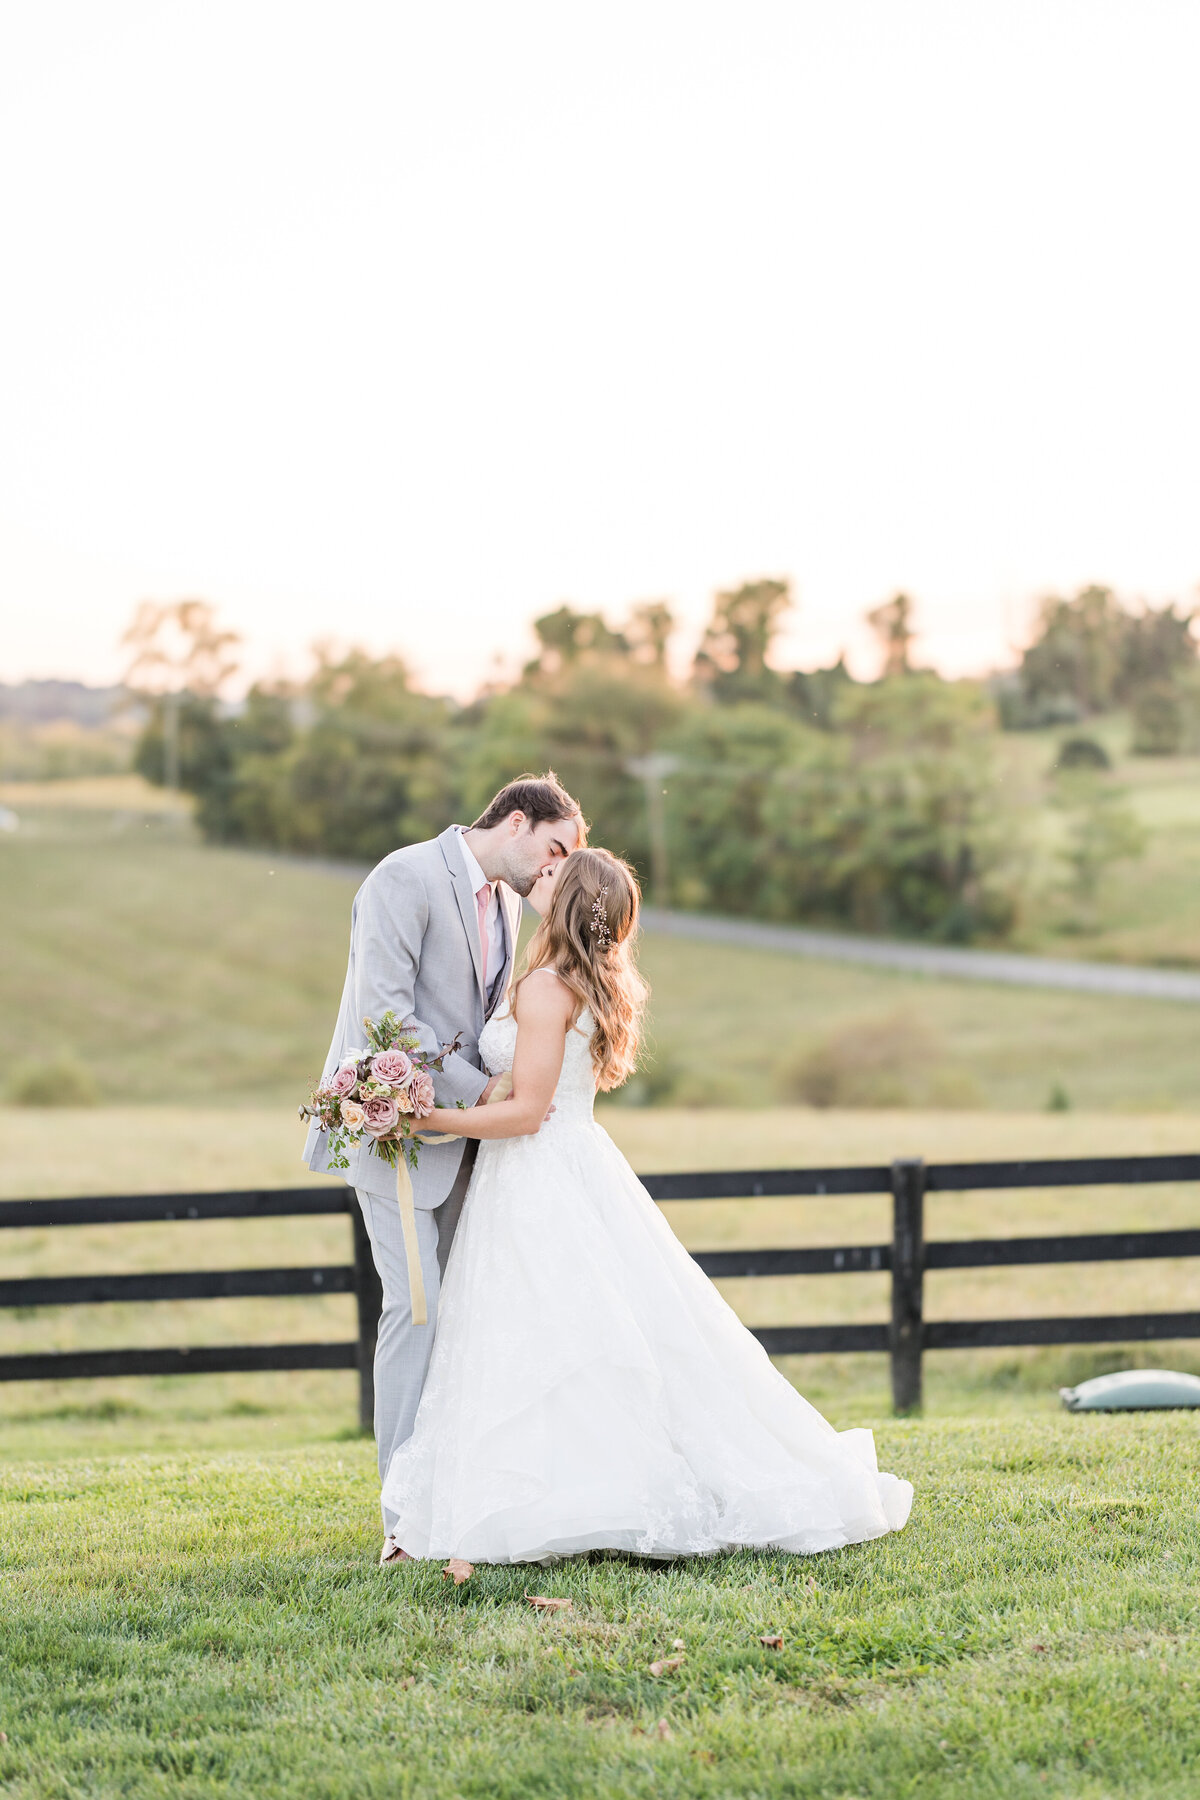 Kelsie & Marc Wedding - Taylor'd Southern Events - Maryland Wedding Photographer -28331